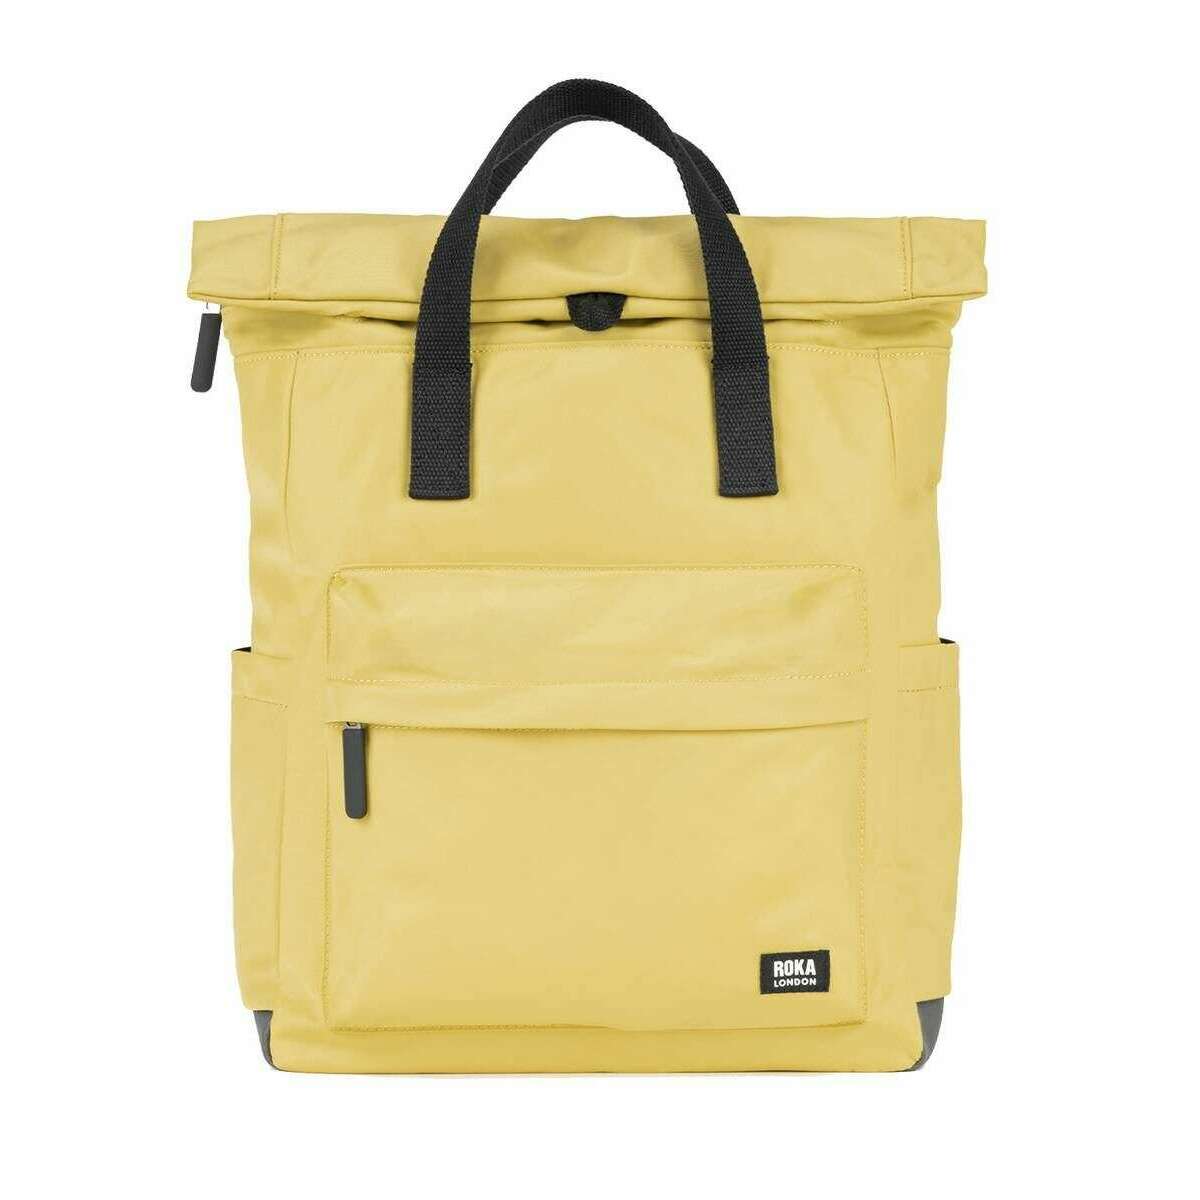 Roka Canfield B Medium Black Label Recycled Nylon Backpack - Bamboo Yellow